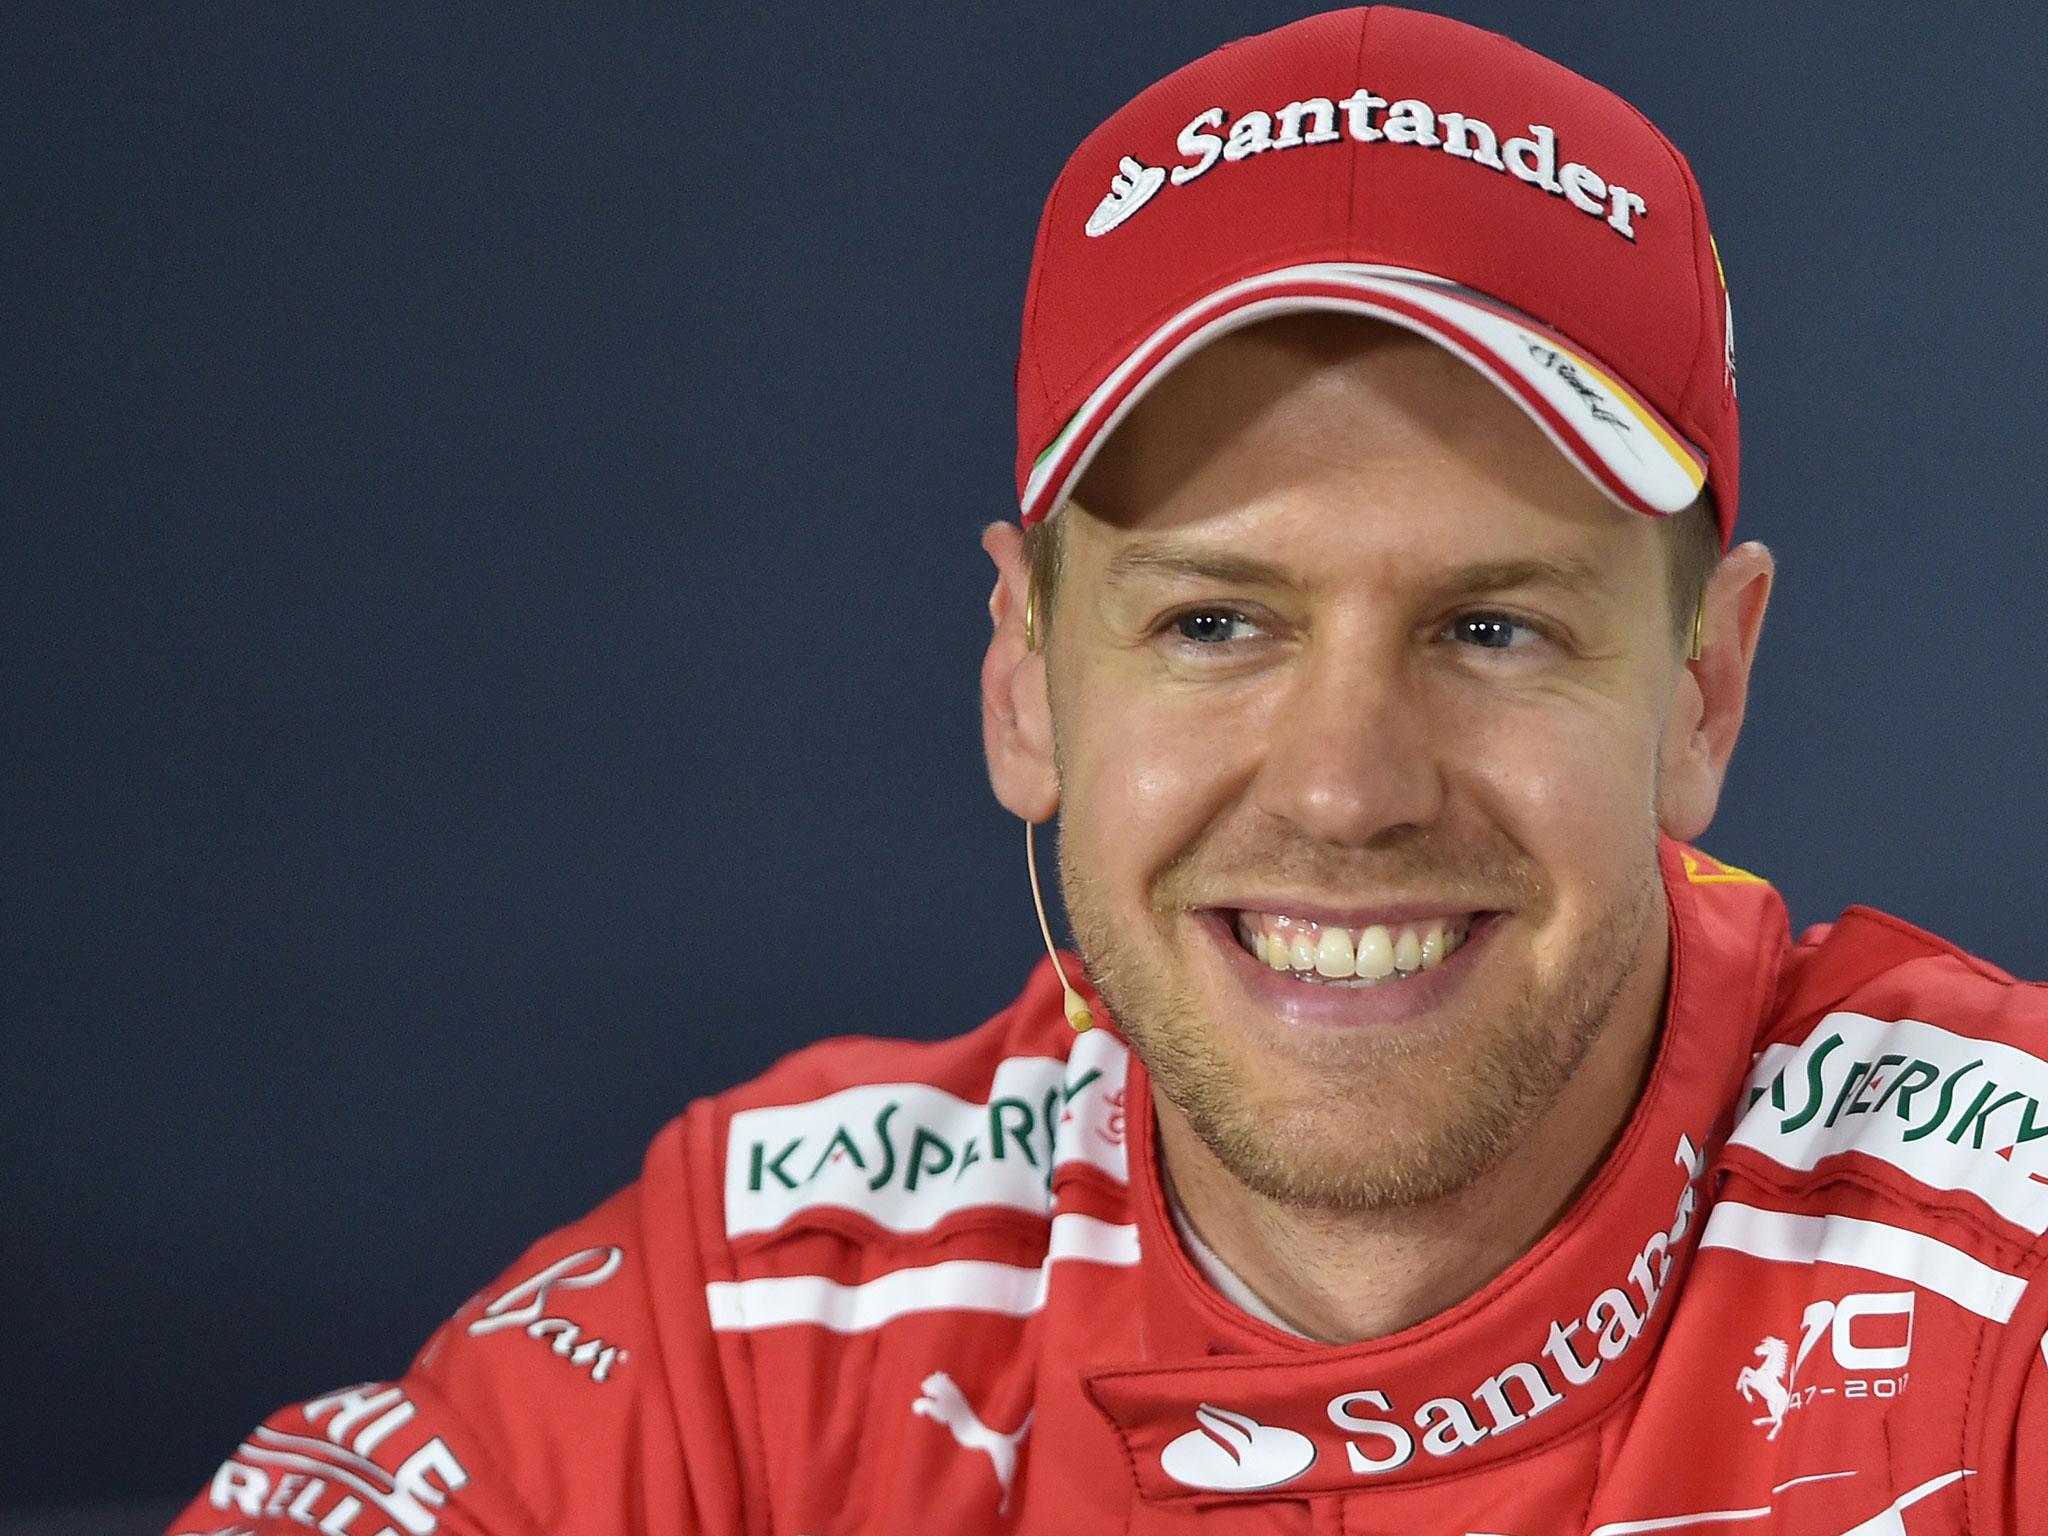 Sebastian Vettel believes Ferrari are well placed to challenge Mercedes this season